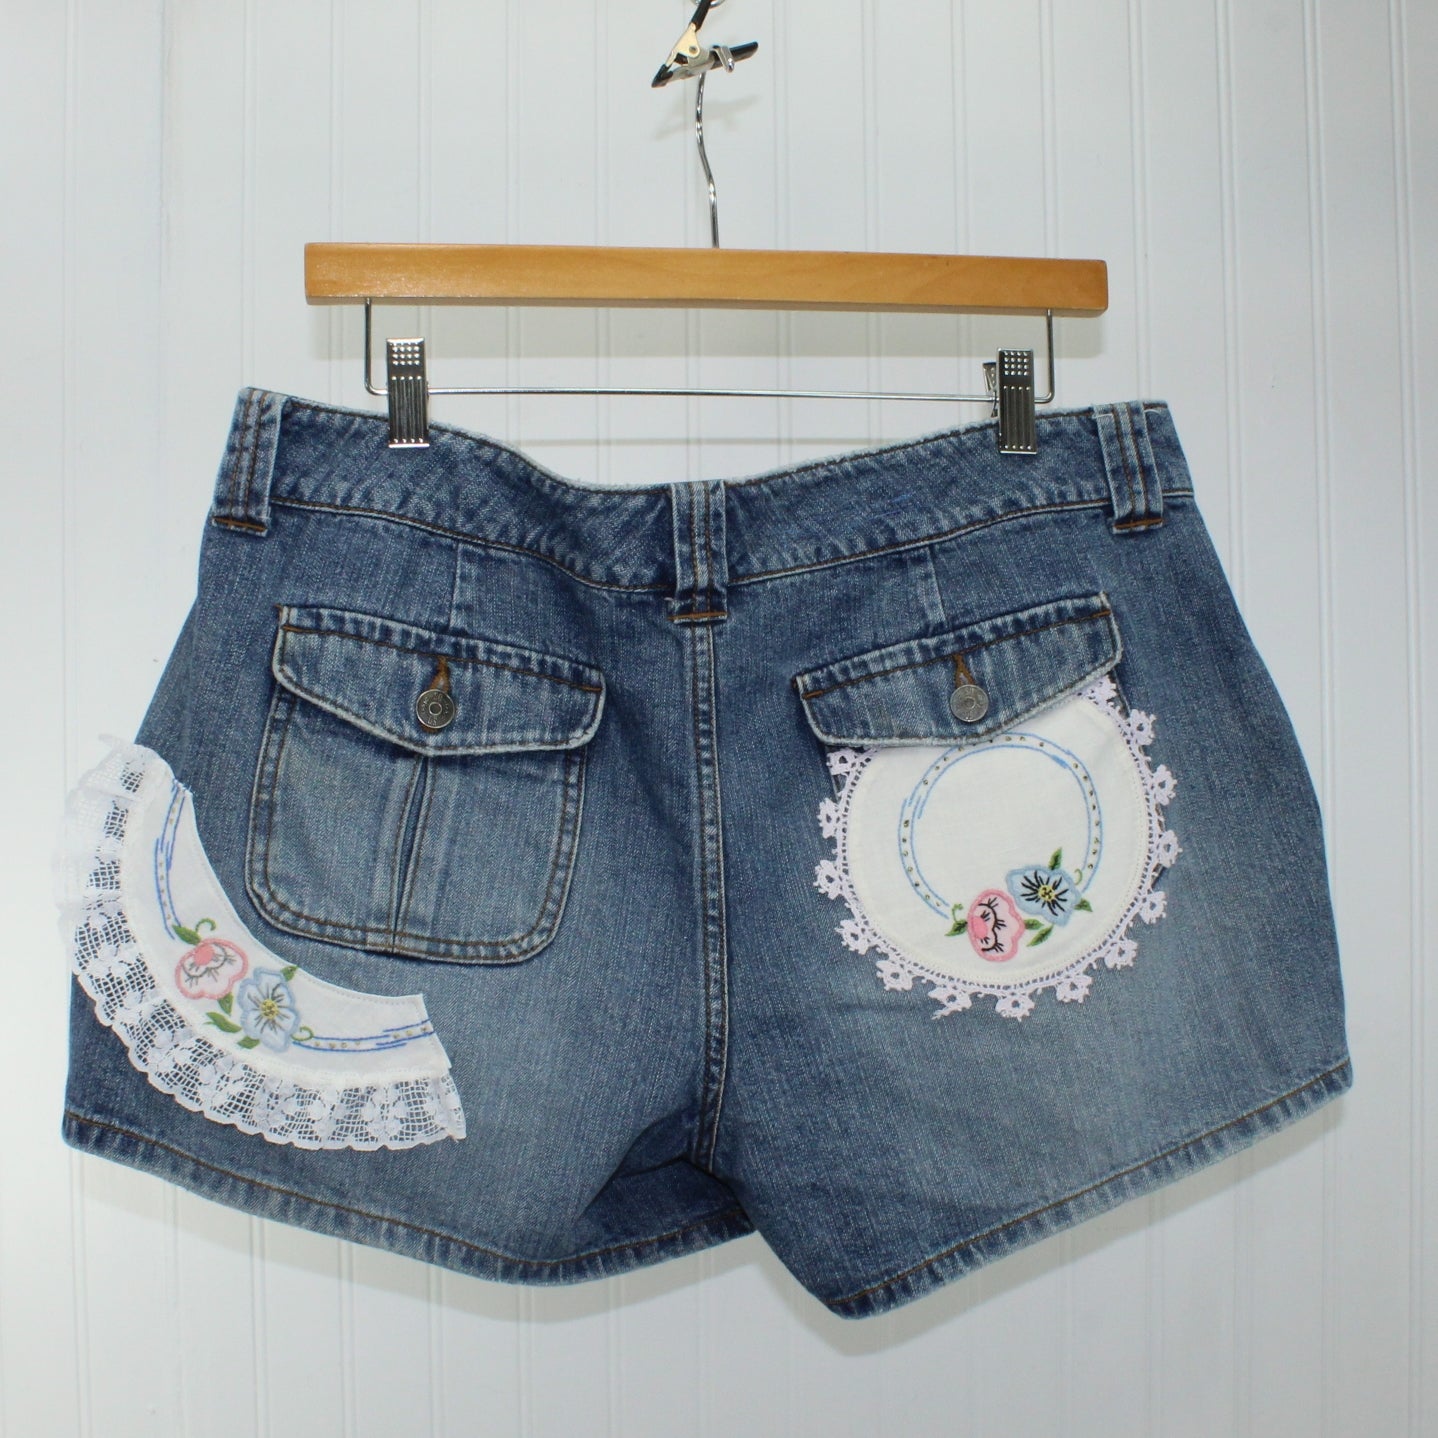 SO Denim Short Jeans 100% Cotton Patzi Design Embroidery Lace Size 15 back view shorts